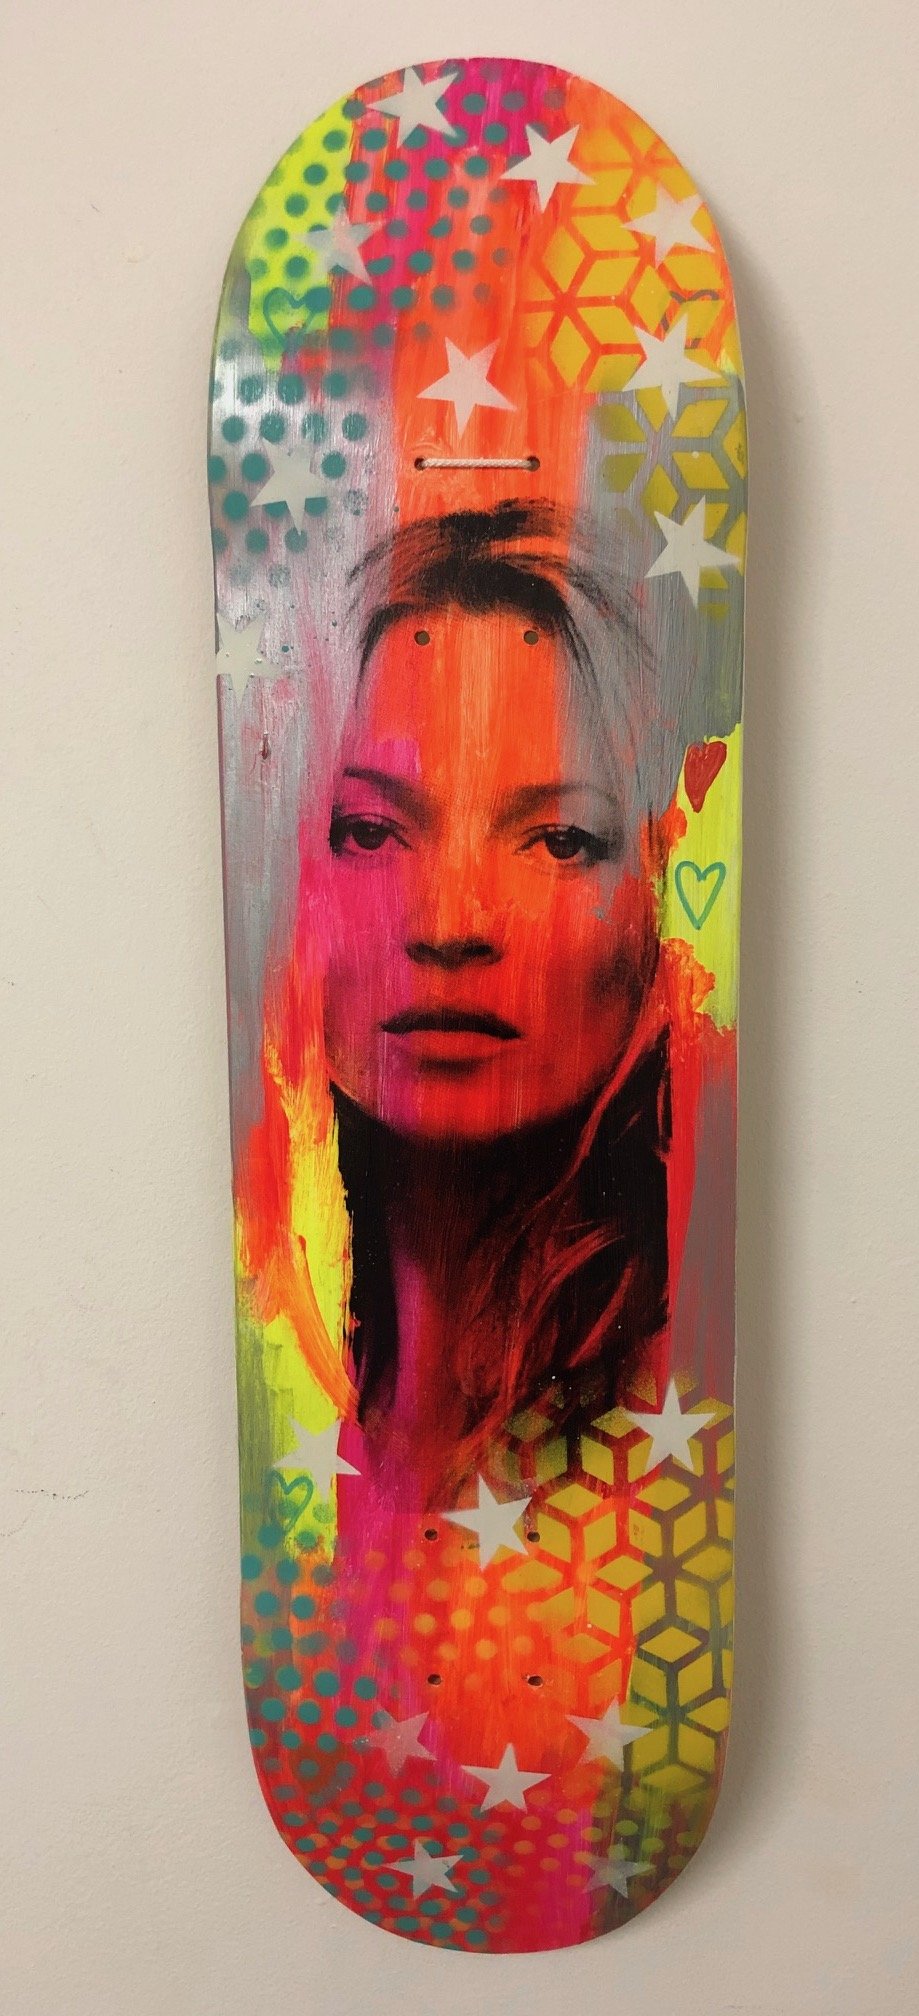 Kate Board 2019 - Silkscreen print and paint on skateboard. Barrie J Davies Pop Art and Street art inspired Artist based in Brighton England UK.